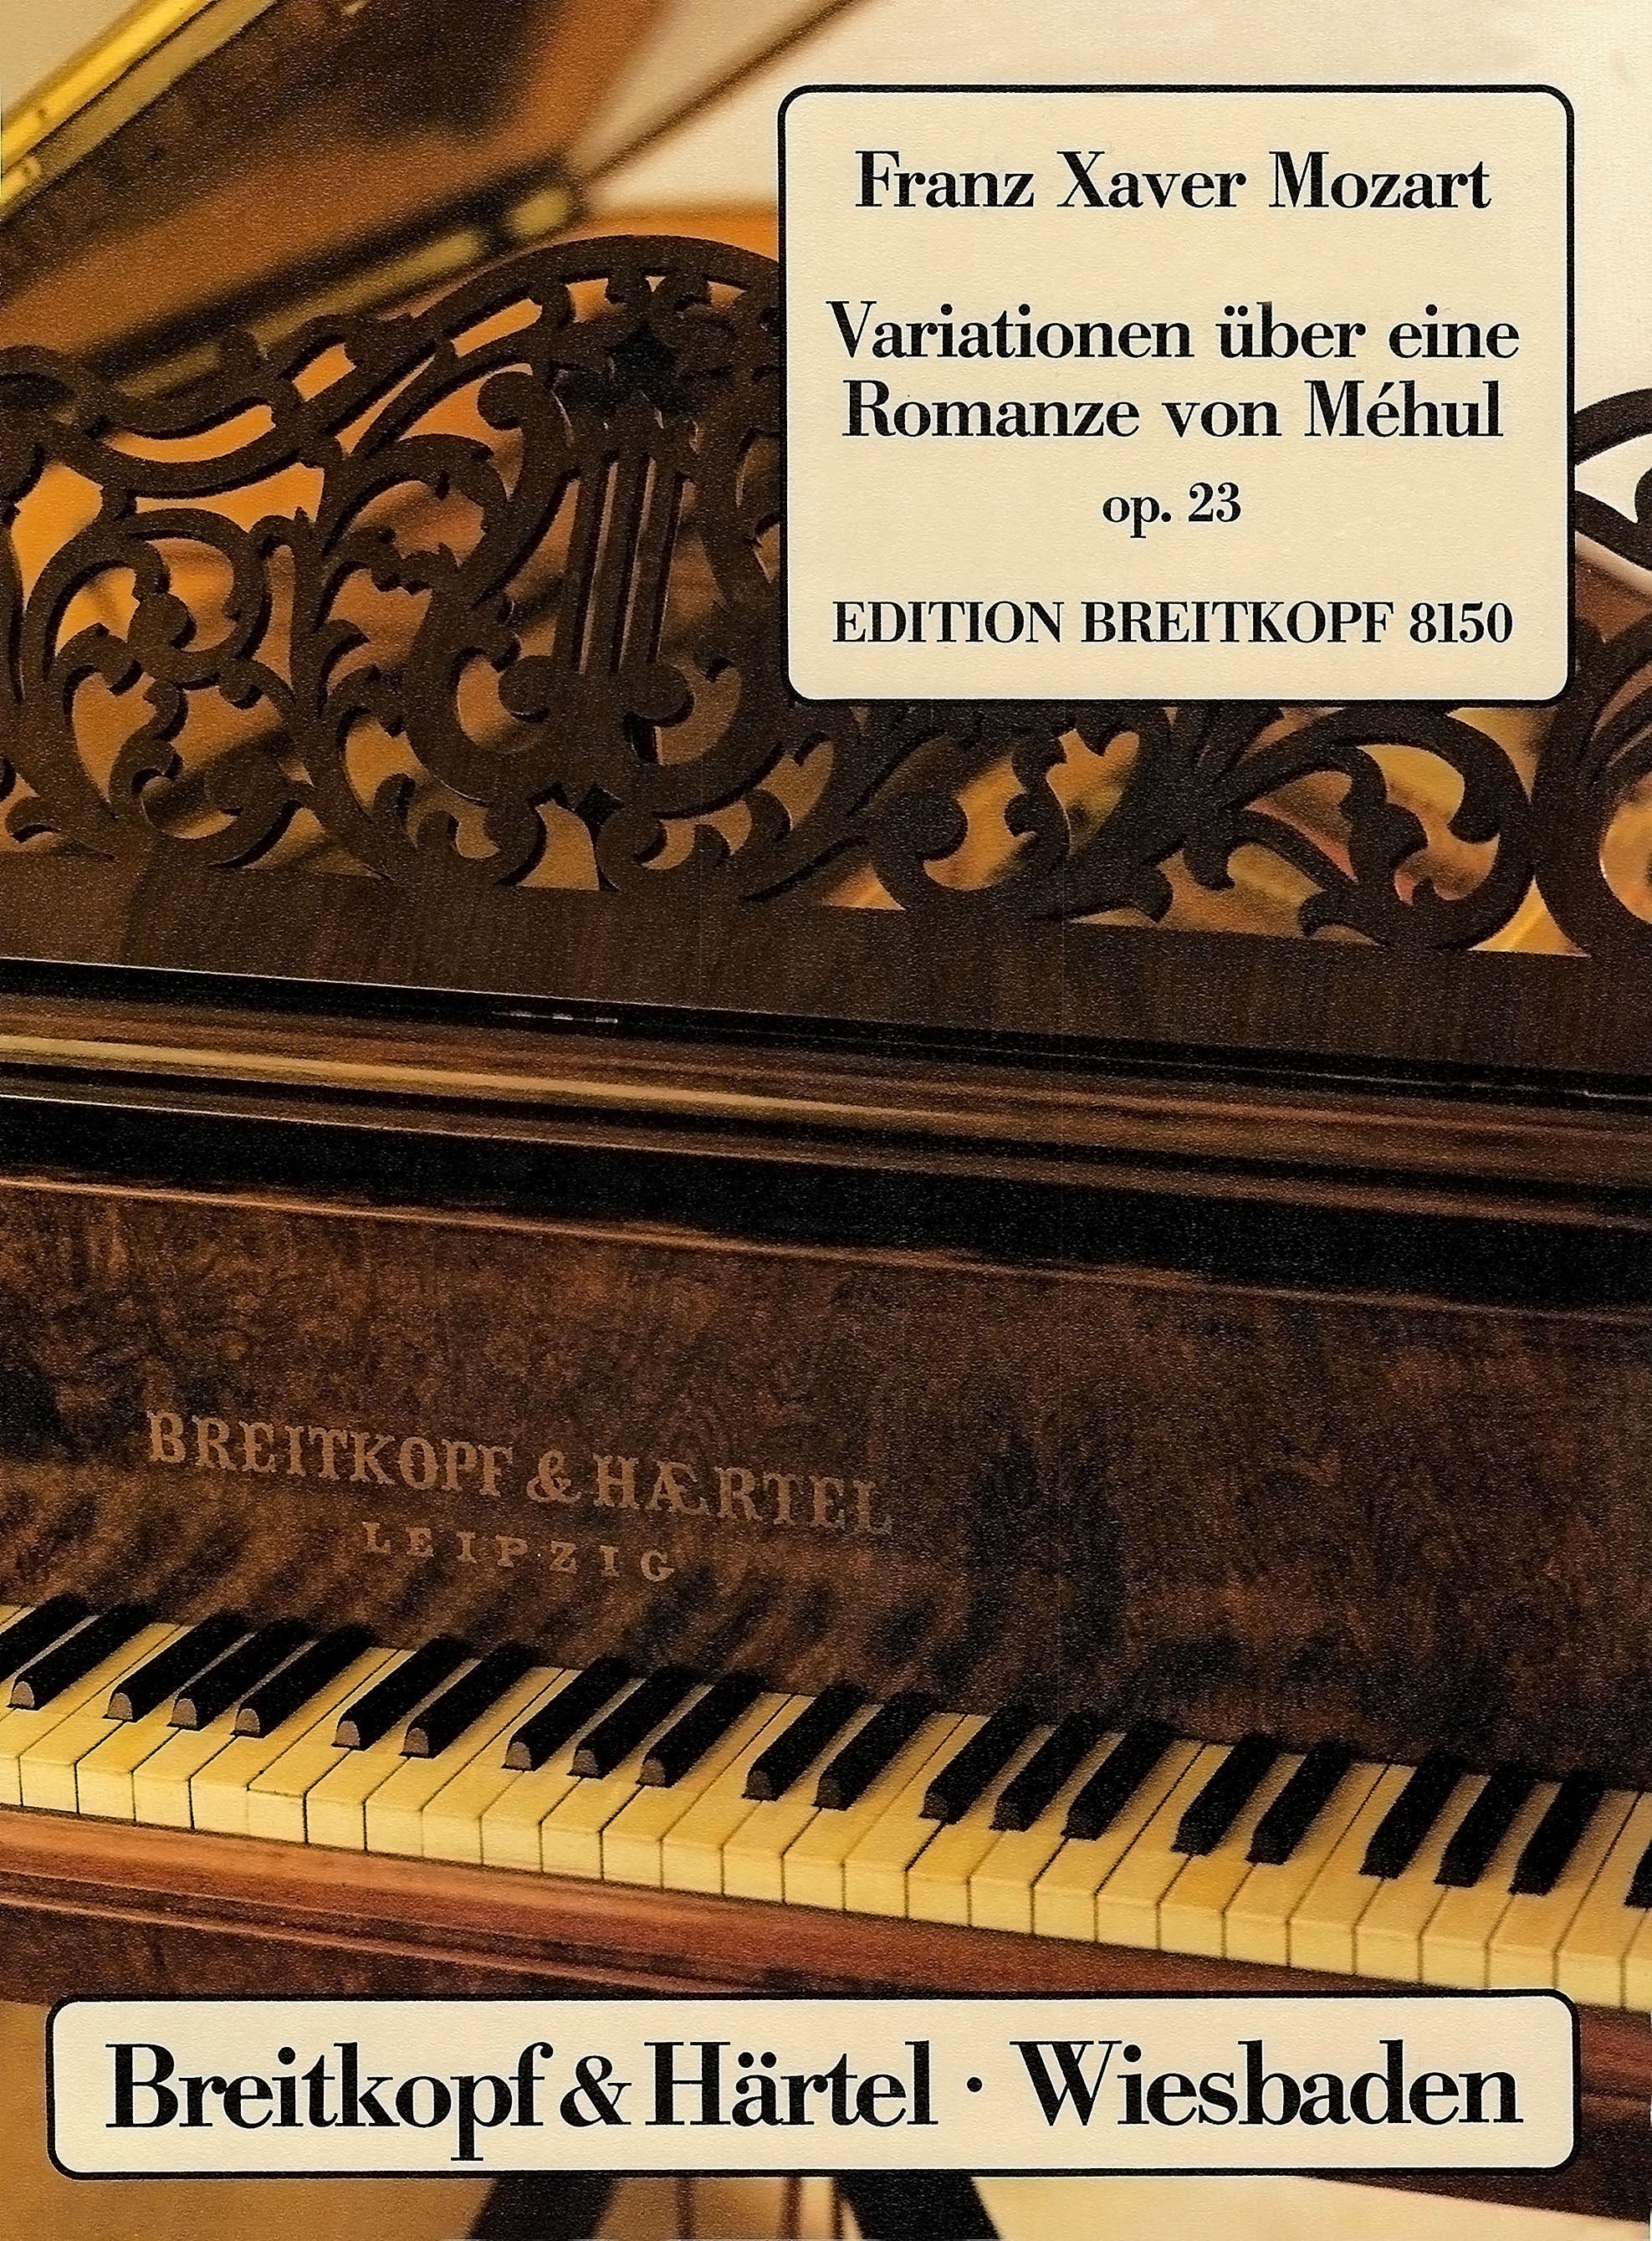 F.X. Mozart: Variations on a Romance by Méhul, Op. 23